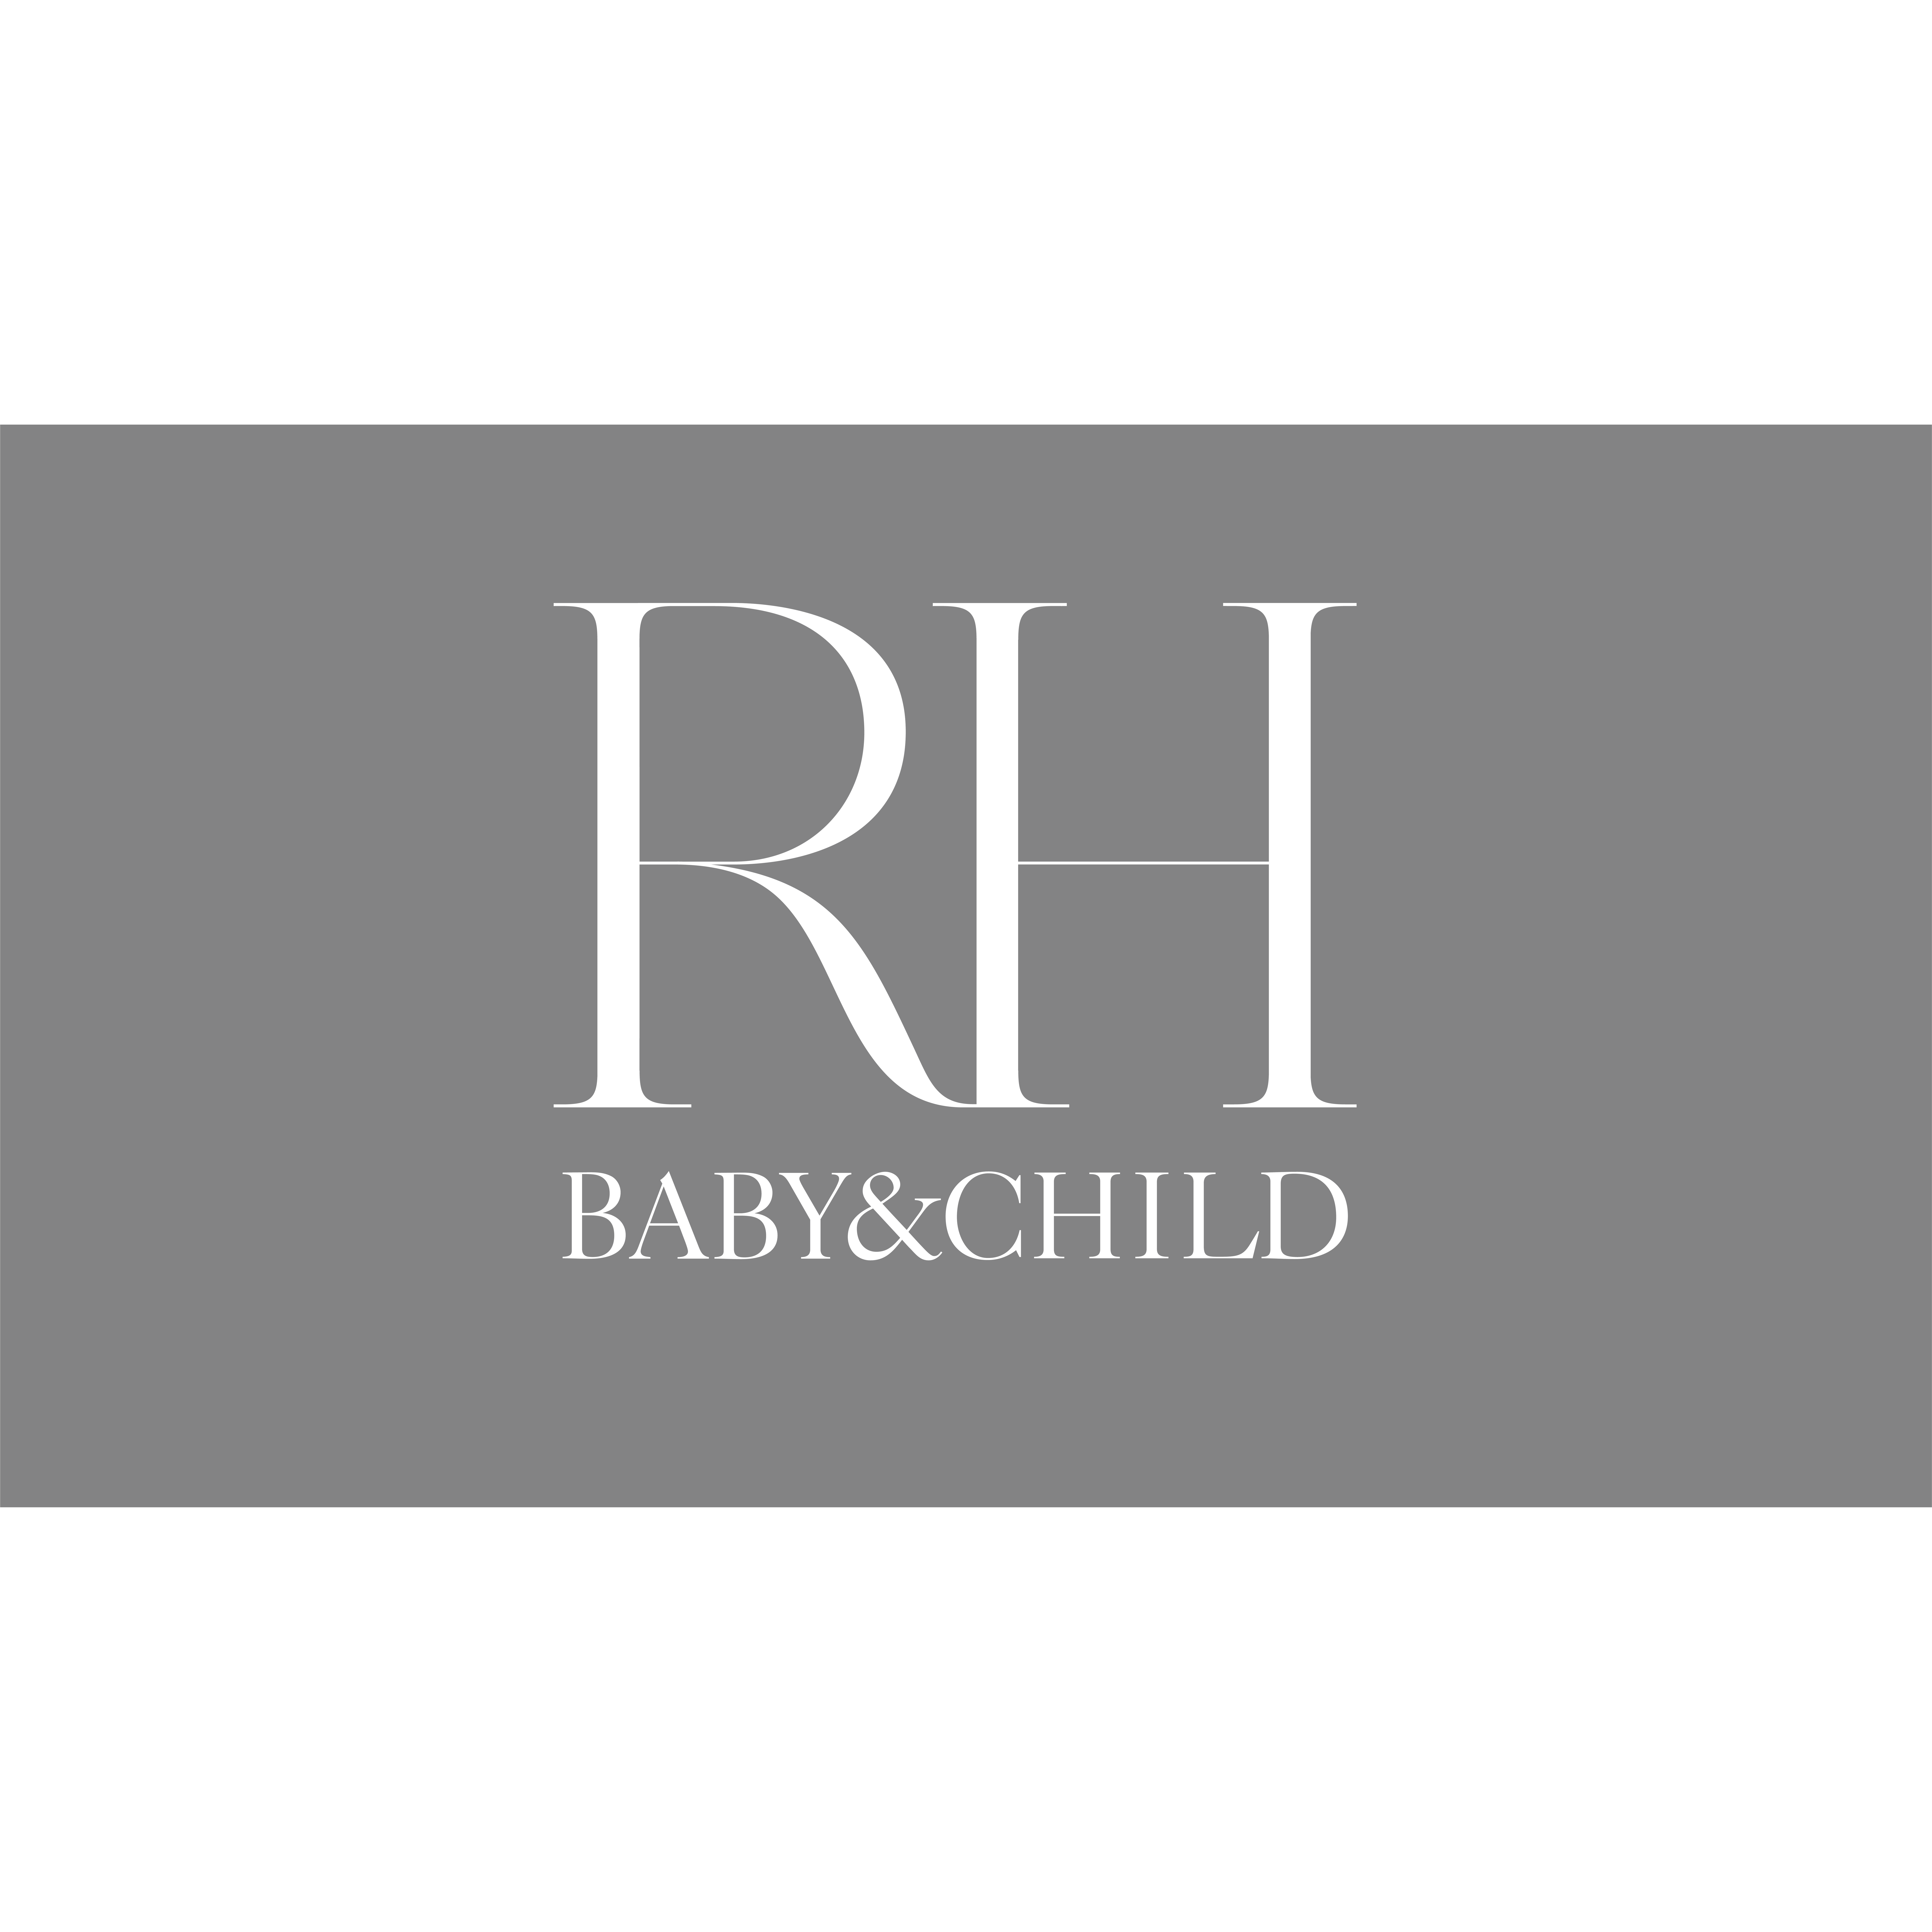 RH Baby & Child Corte Madera | The Gallery at The Village at Corte Madera